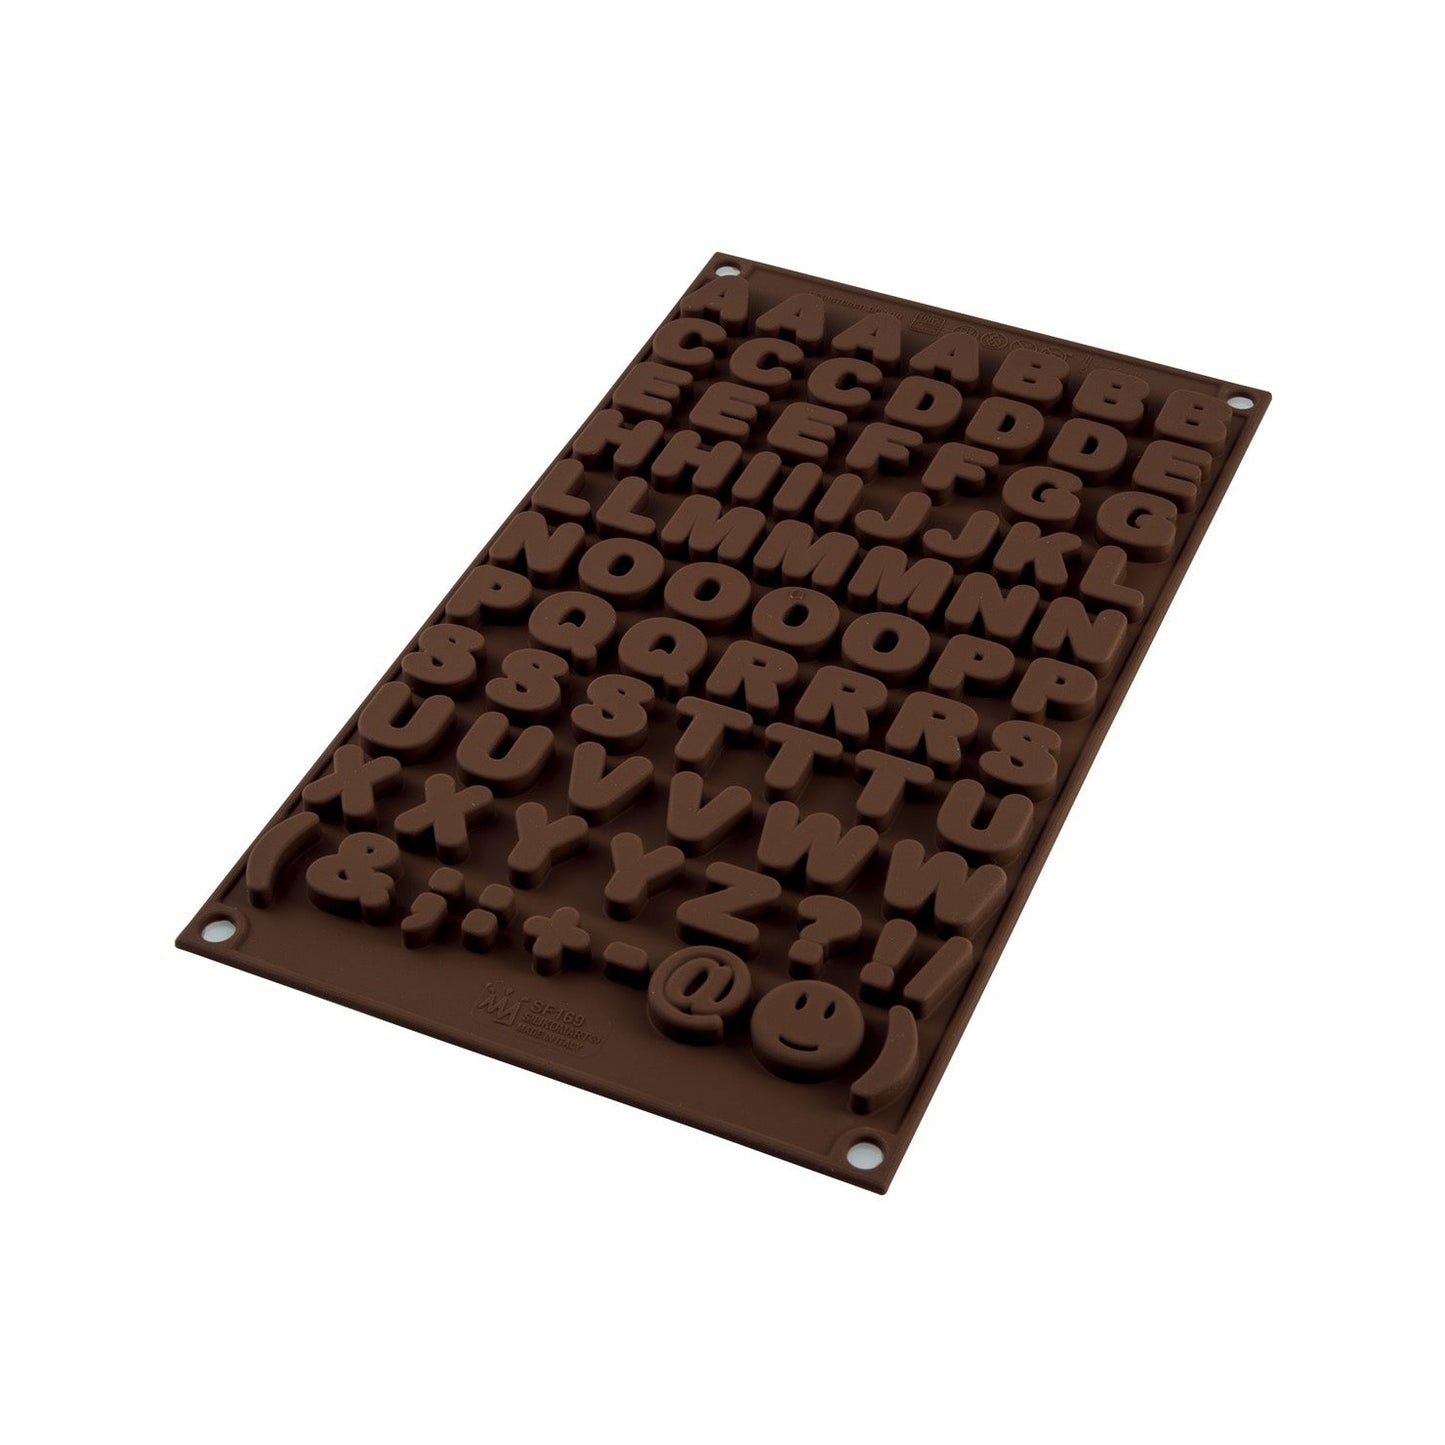 Silikomart - Silikonform - Schokoladenform ABC